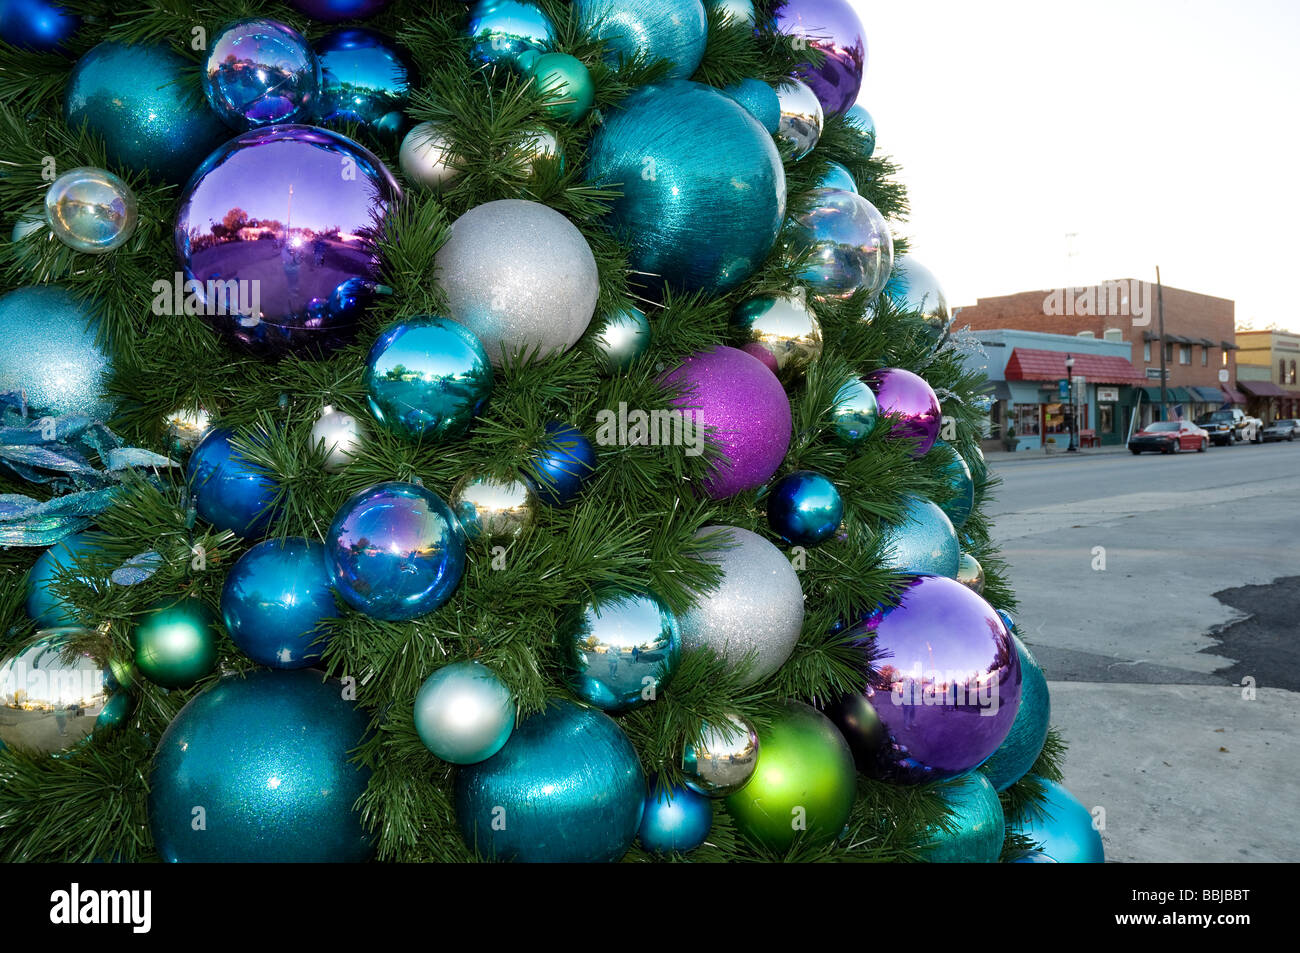 giant Christmas tree of colored balls downtown High Springs Florida Stock  Photo - Alamy